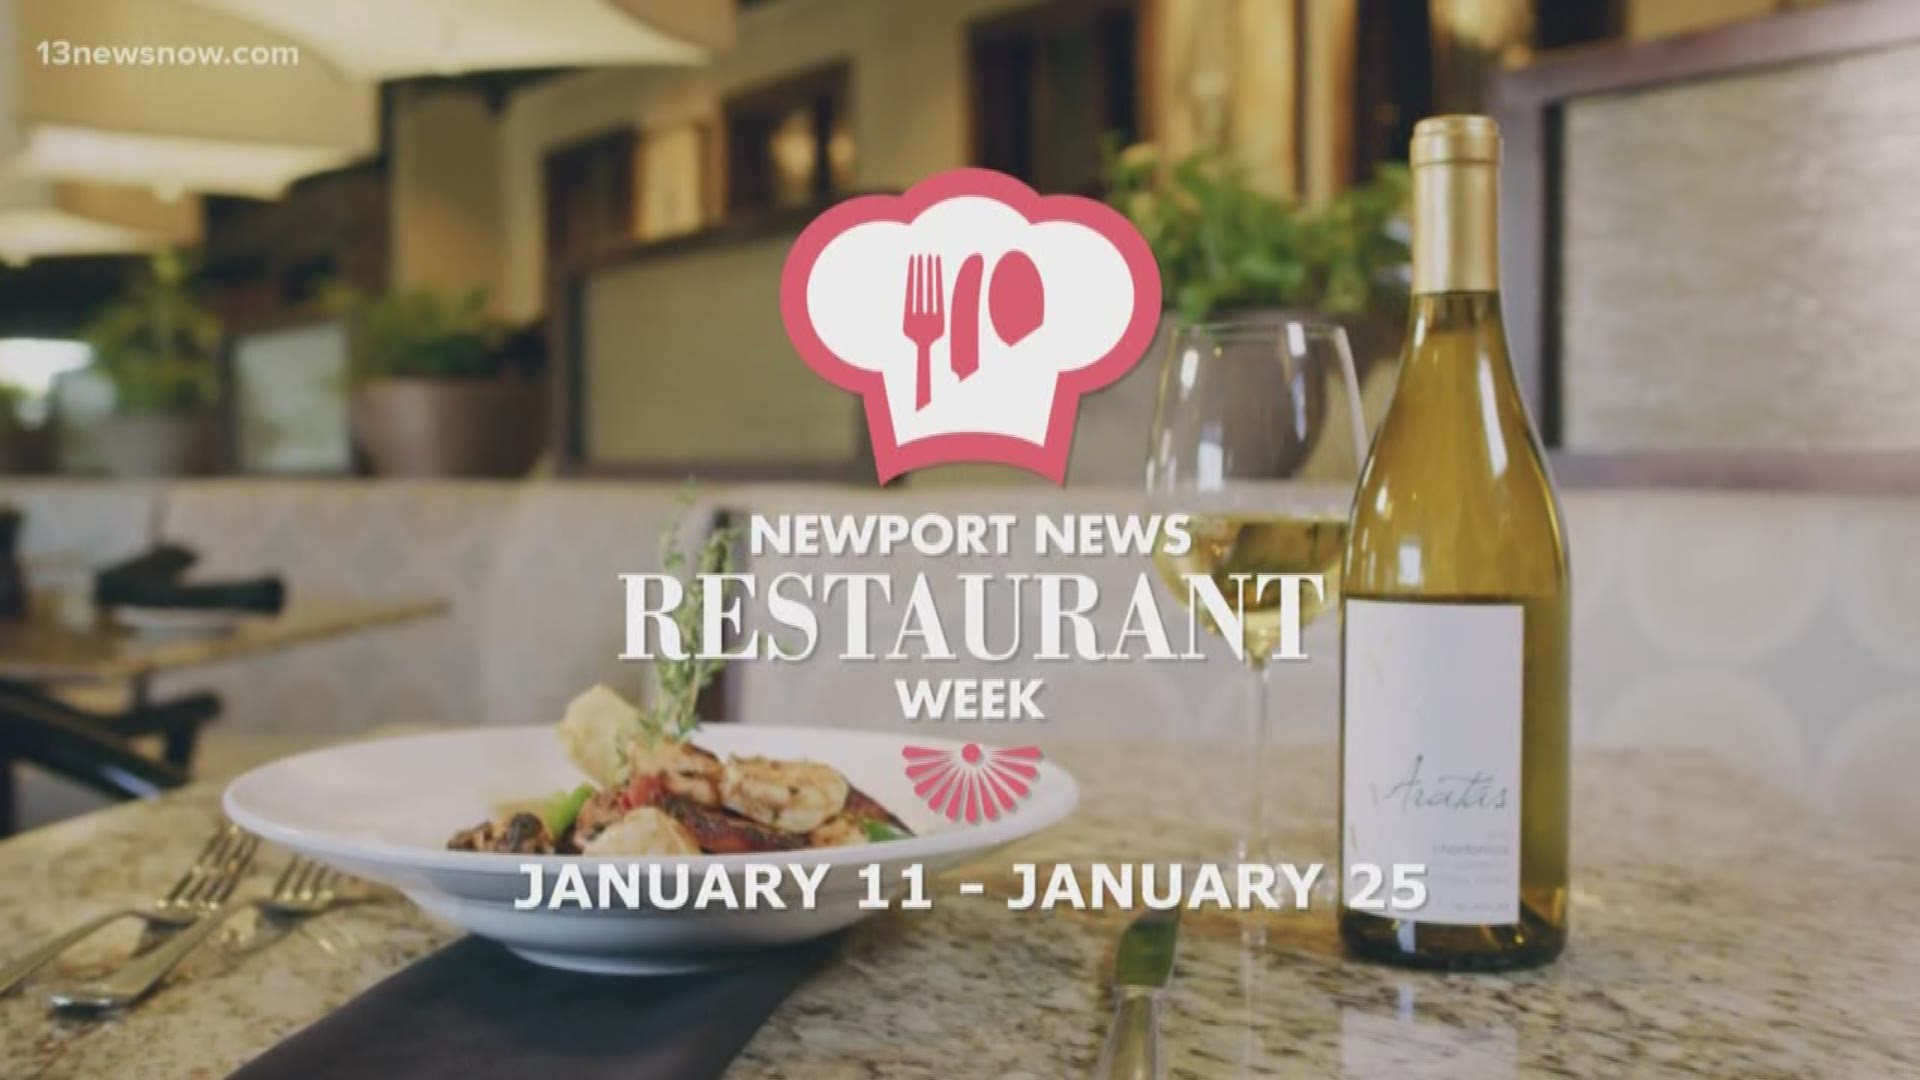 Newport News Restaurant Week kicks off this weekend